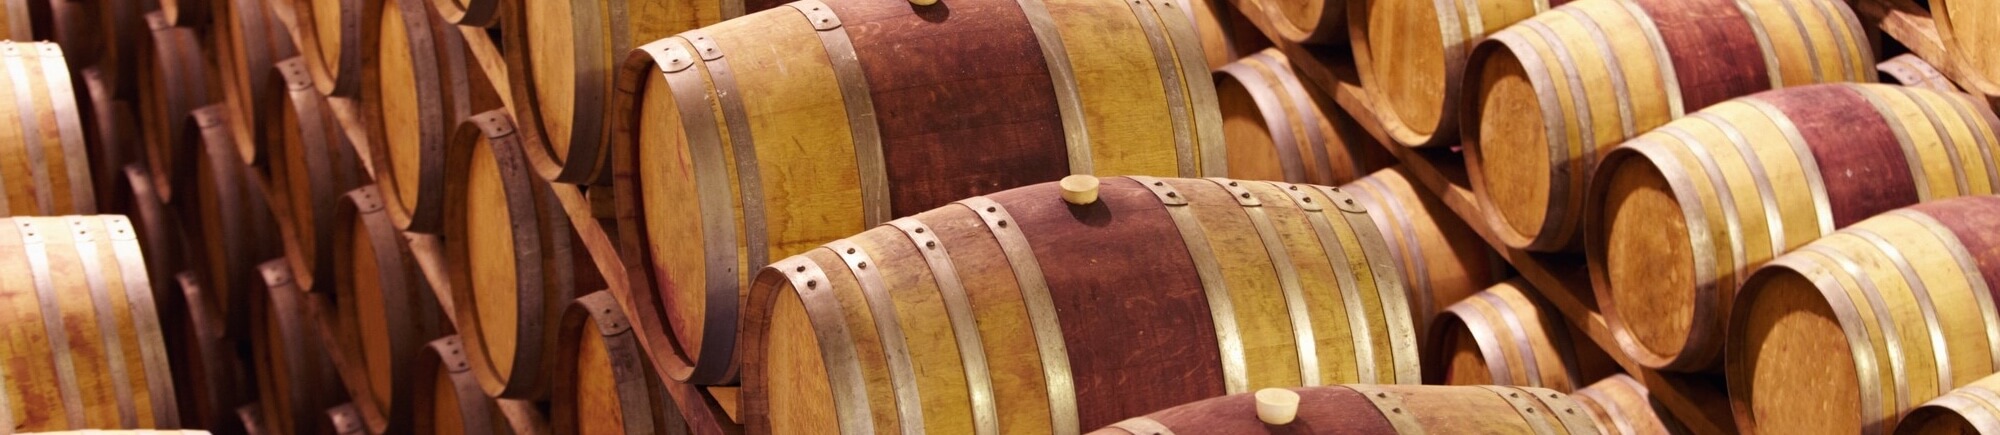 Wine Filtering System